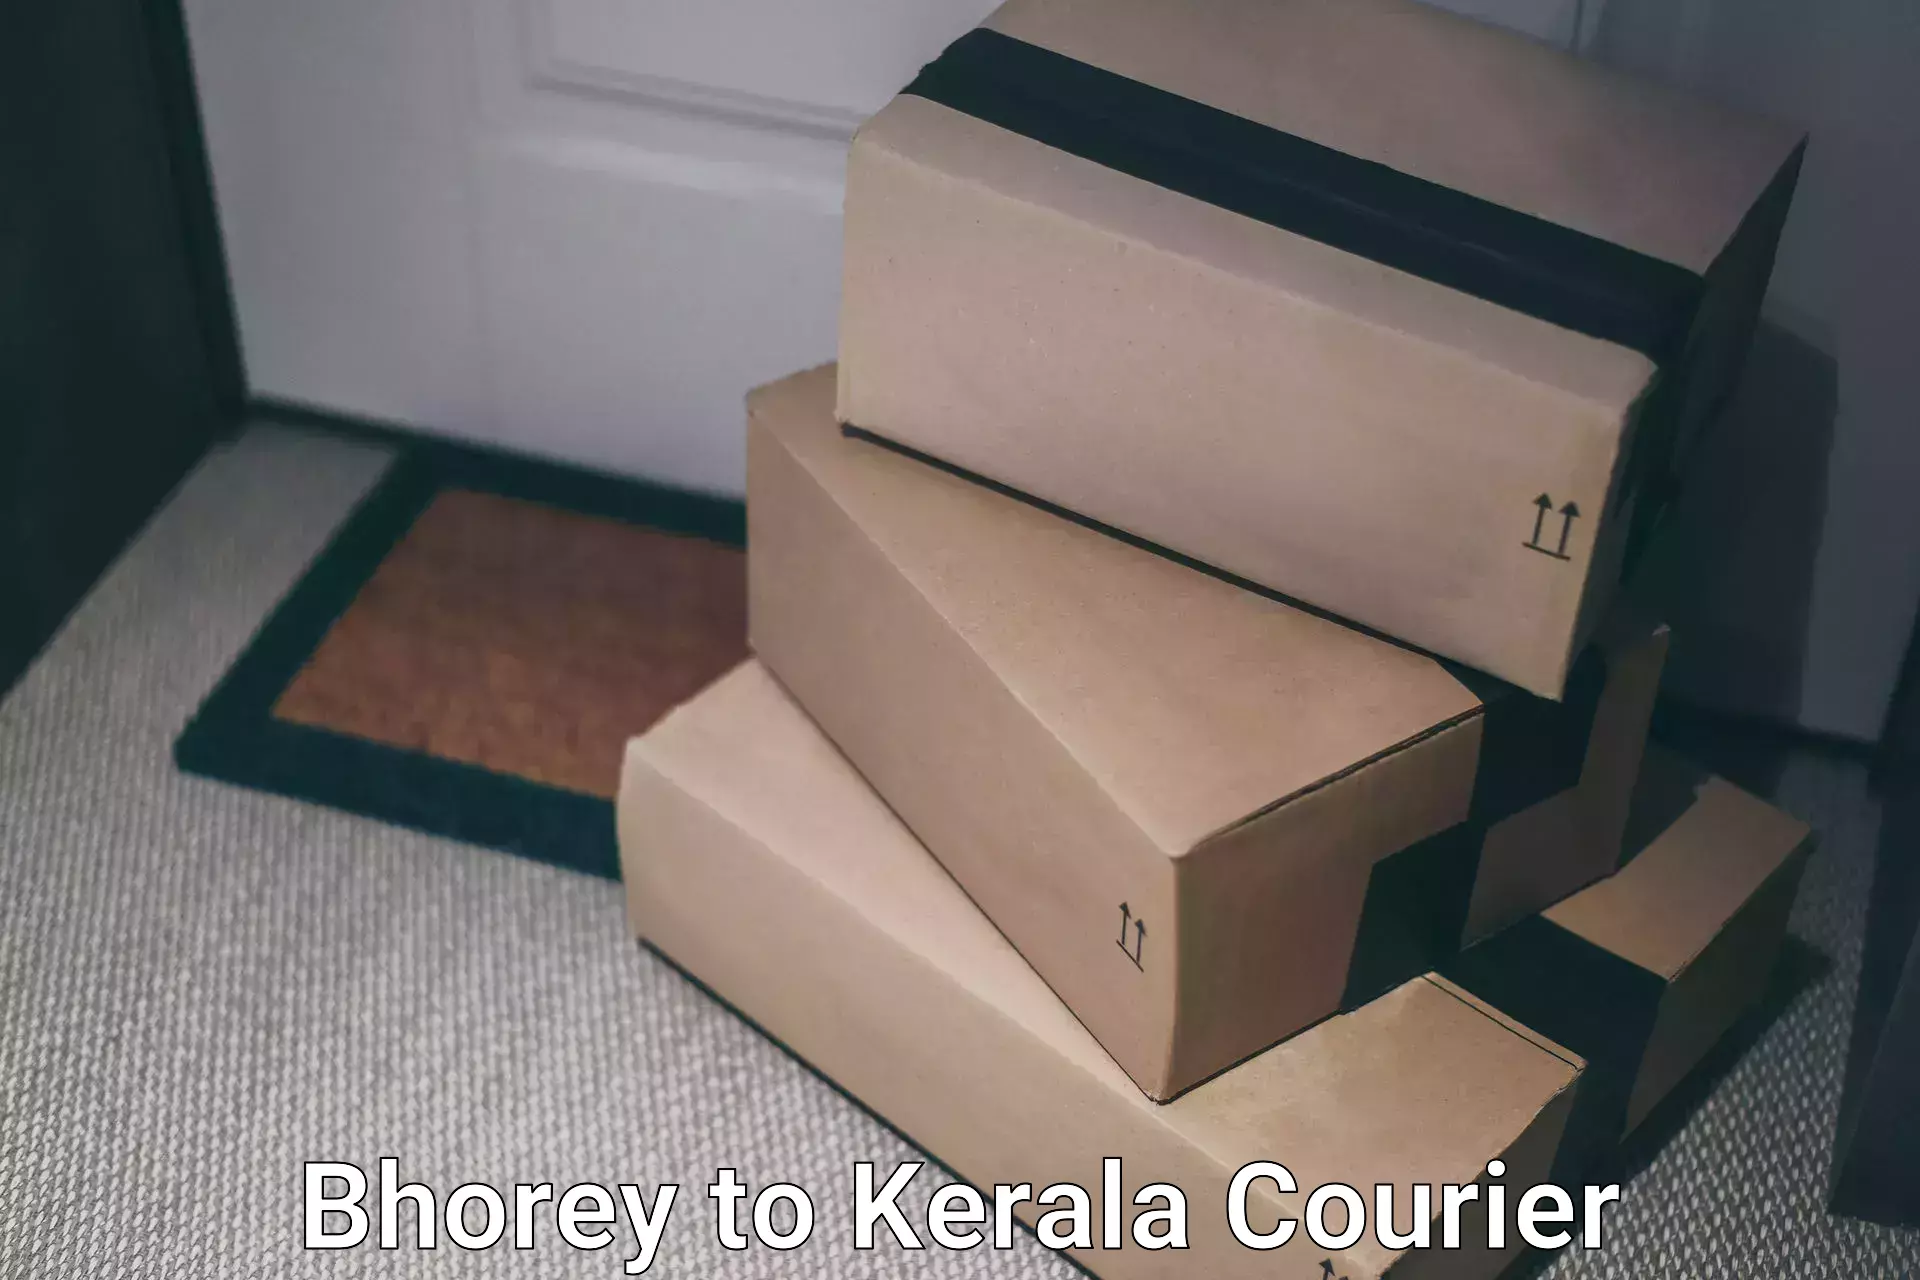 Affordable international shipping Bhorey to Trivandrum